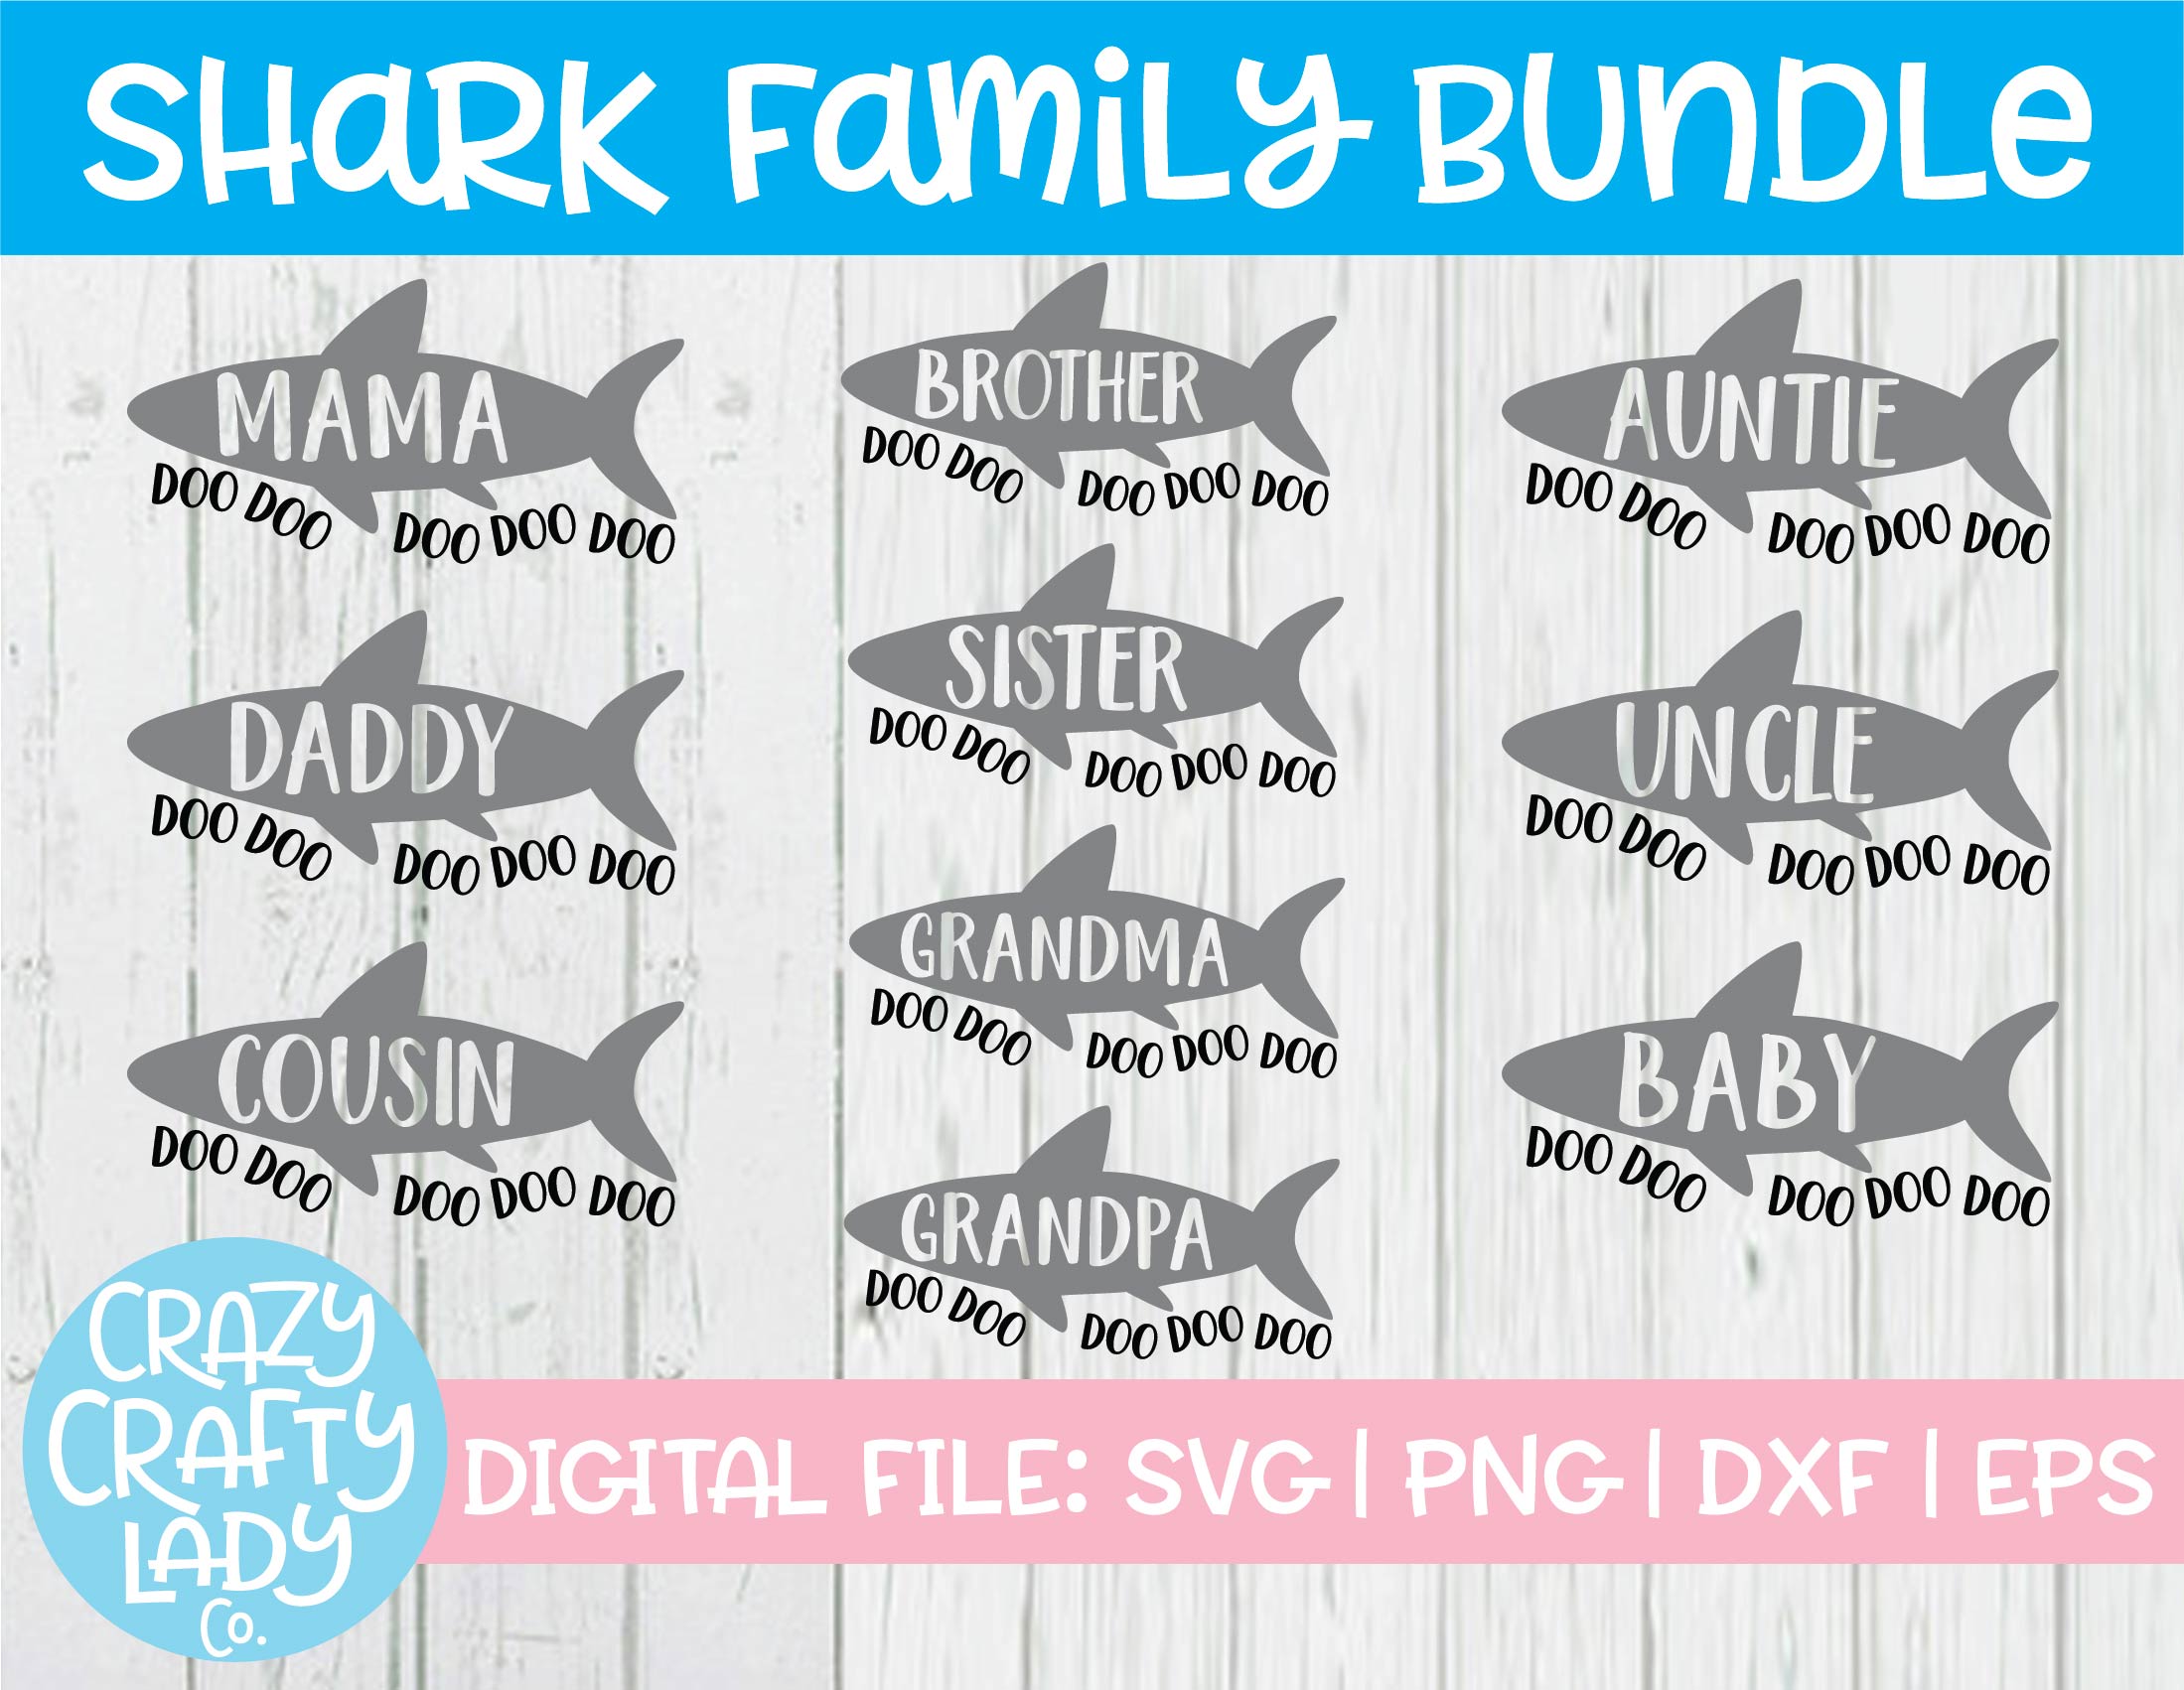 Download Shark Family Svg Cut File Bundle Crazy Crafty Lady Co